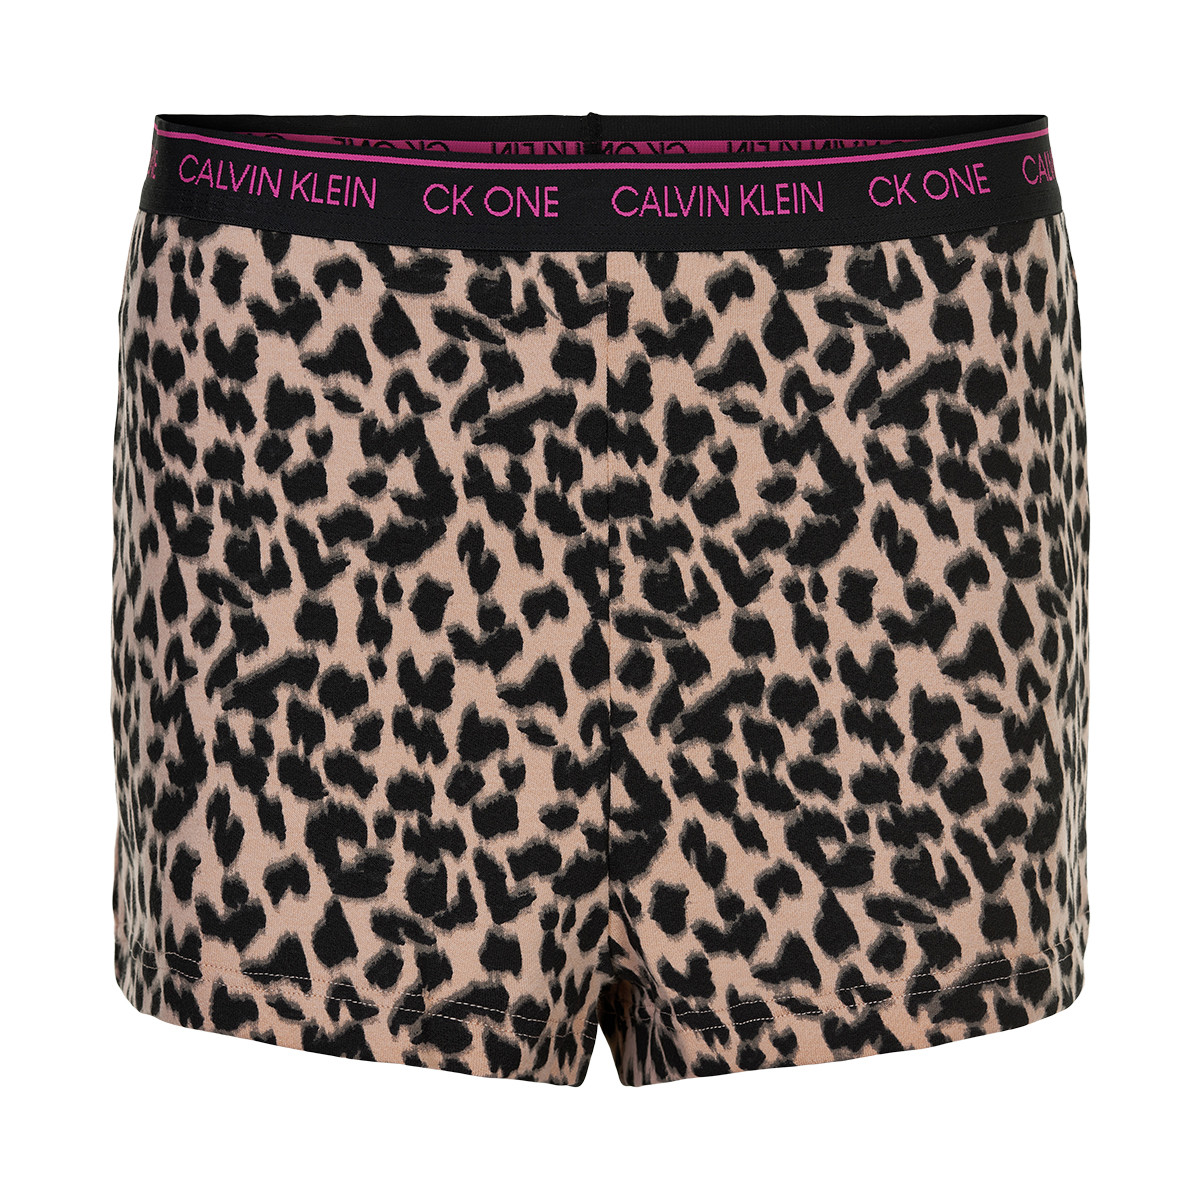 Calvin Klein Lingeri Shorts, Farve: Multicolor, Størrelse: XS, Dame